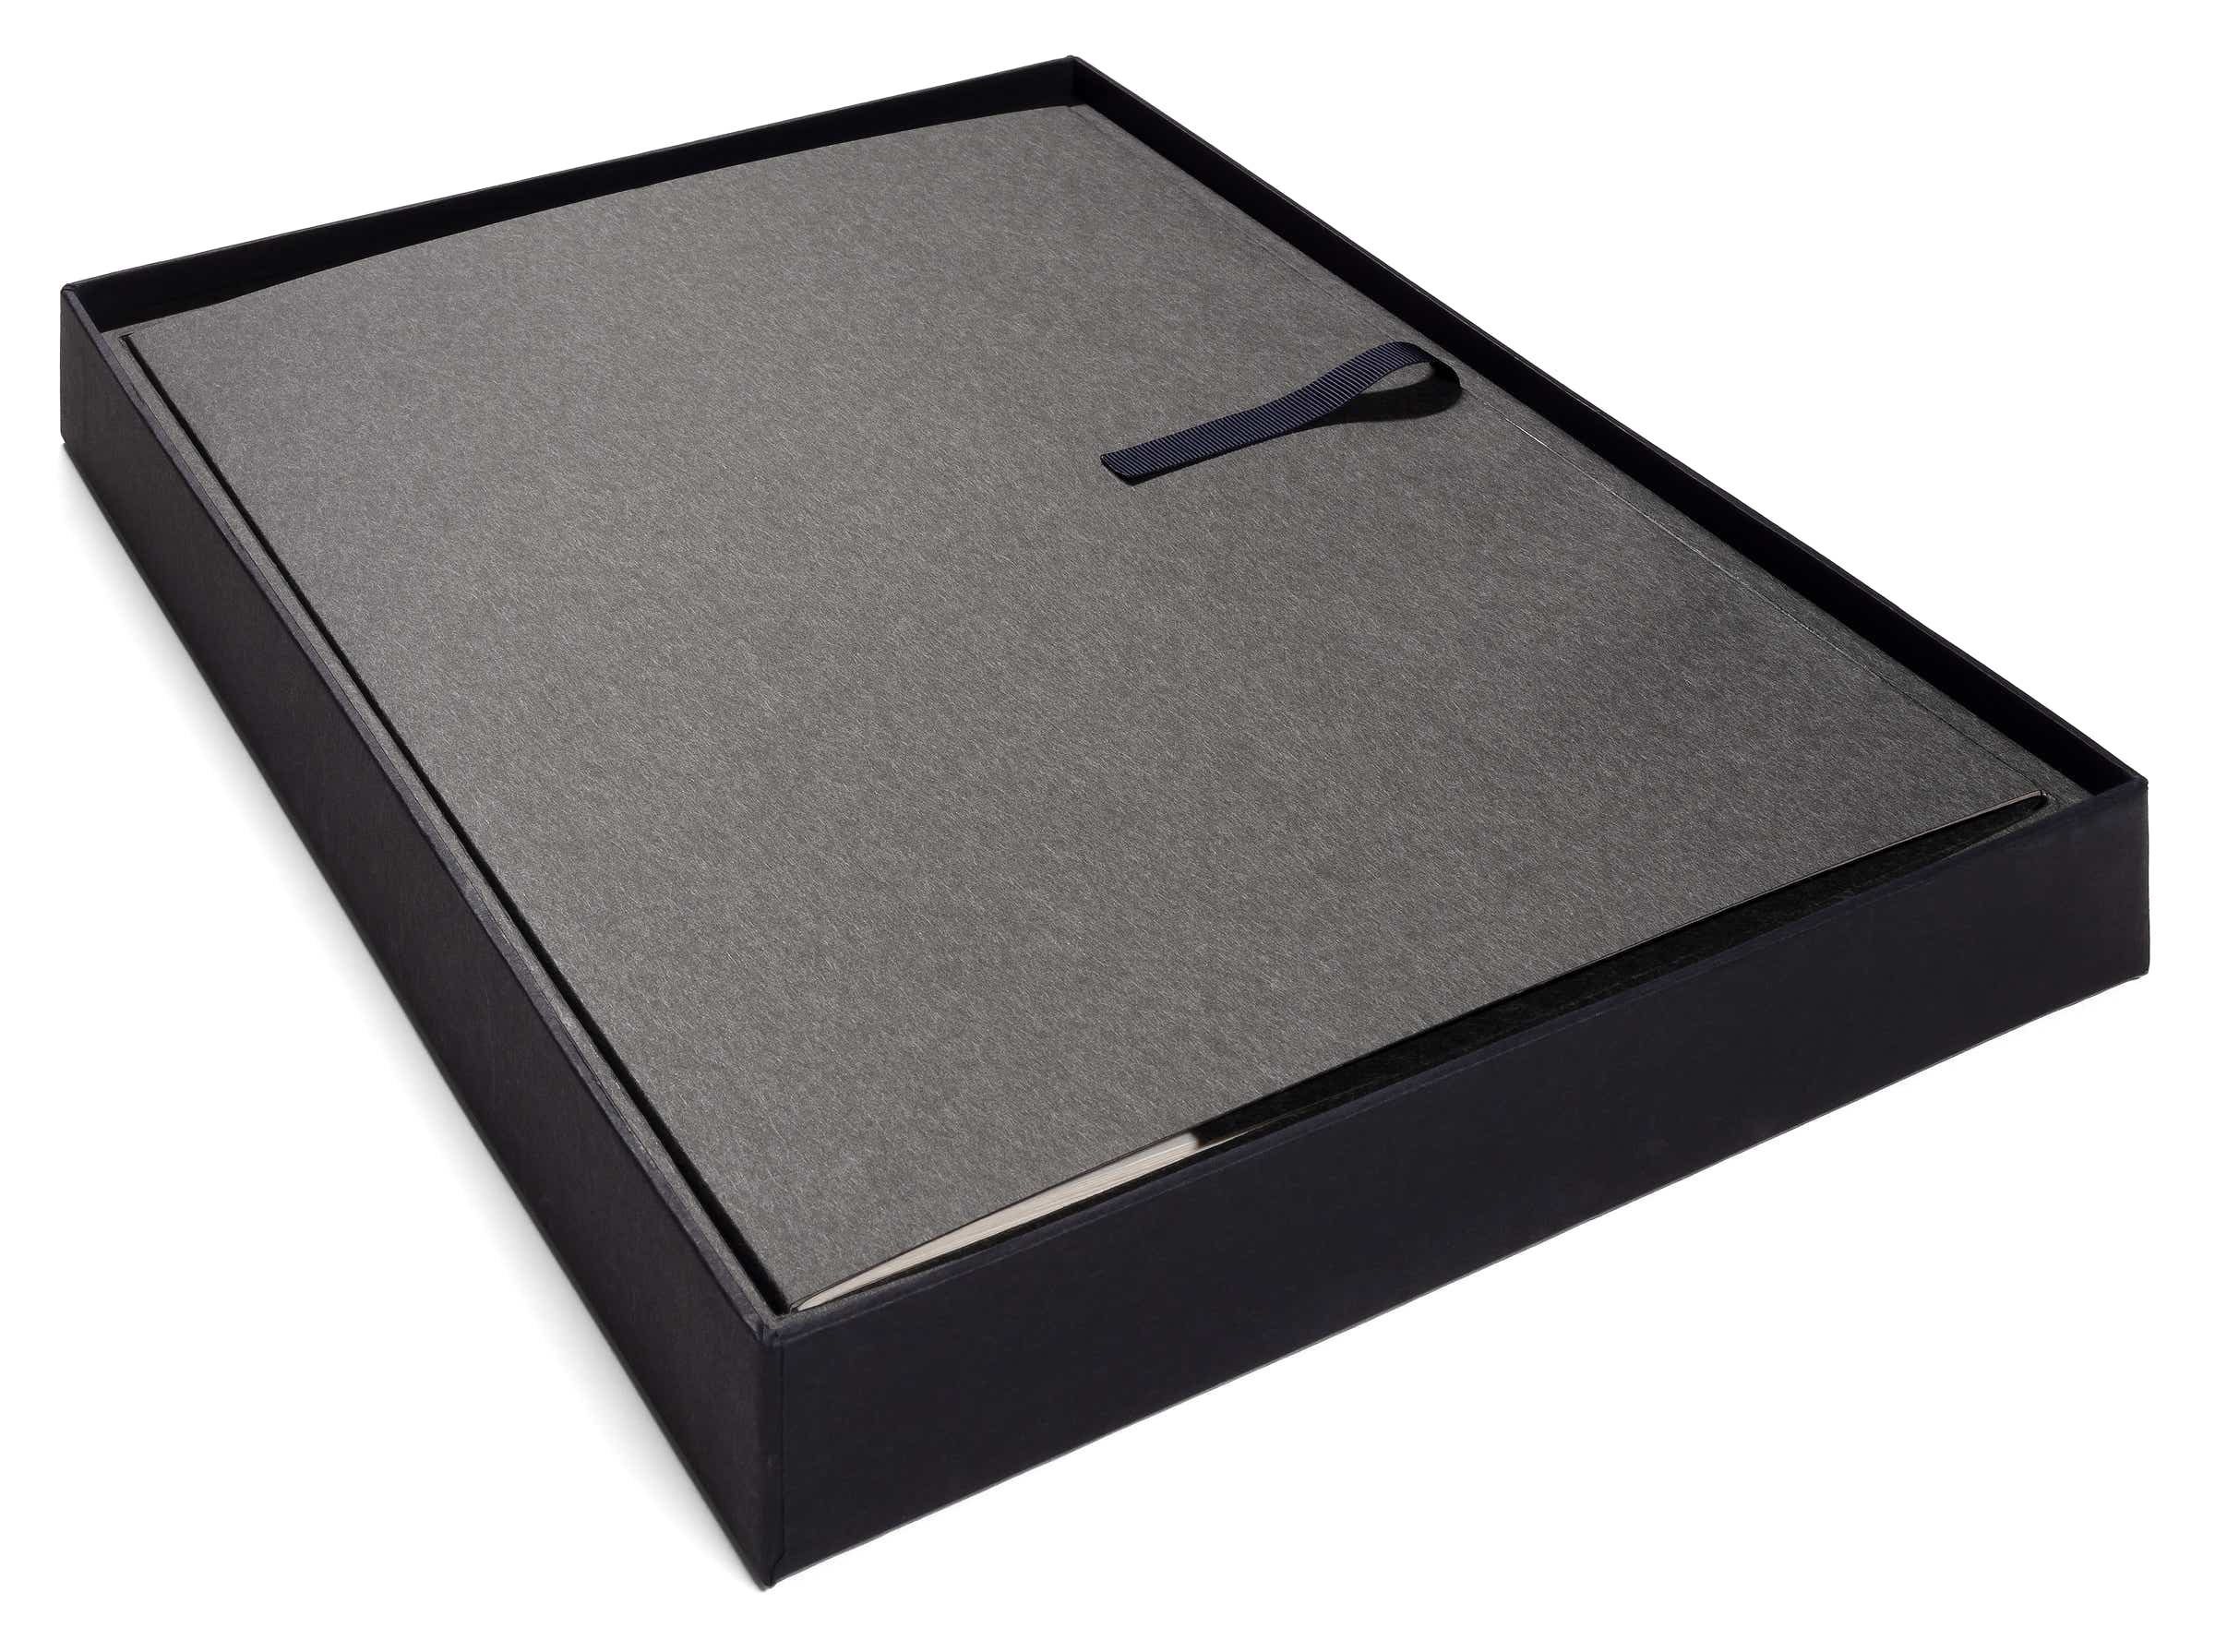 Box with artist book and original book: 33.4 x 23.9 x 4.0 cm